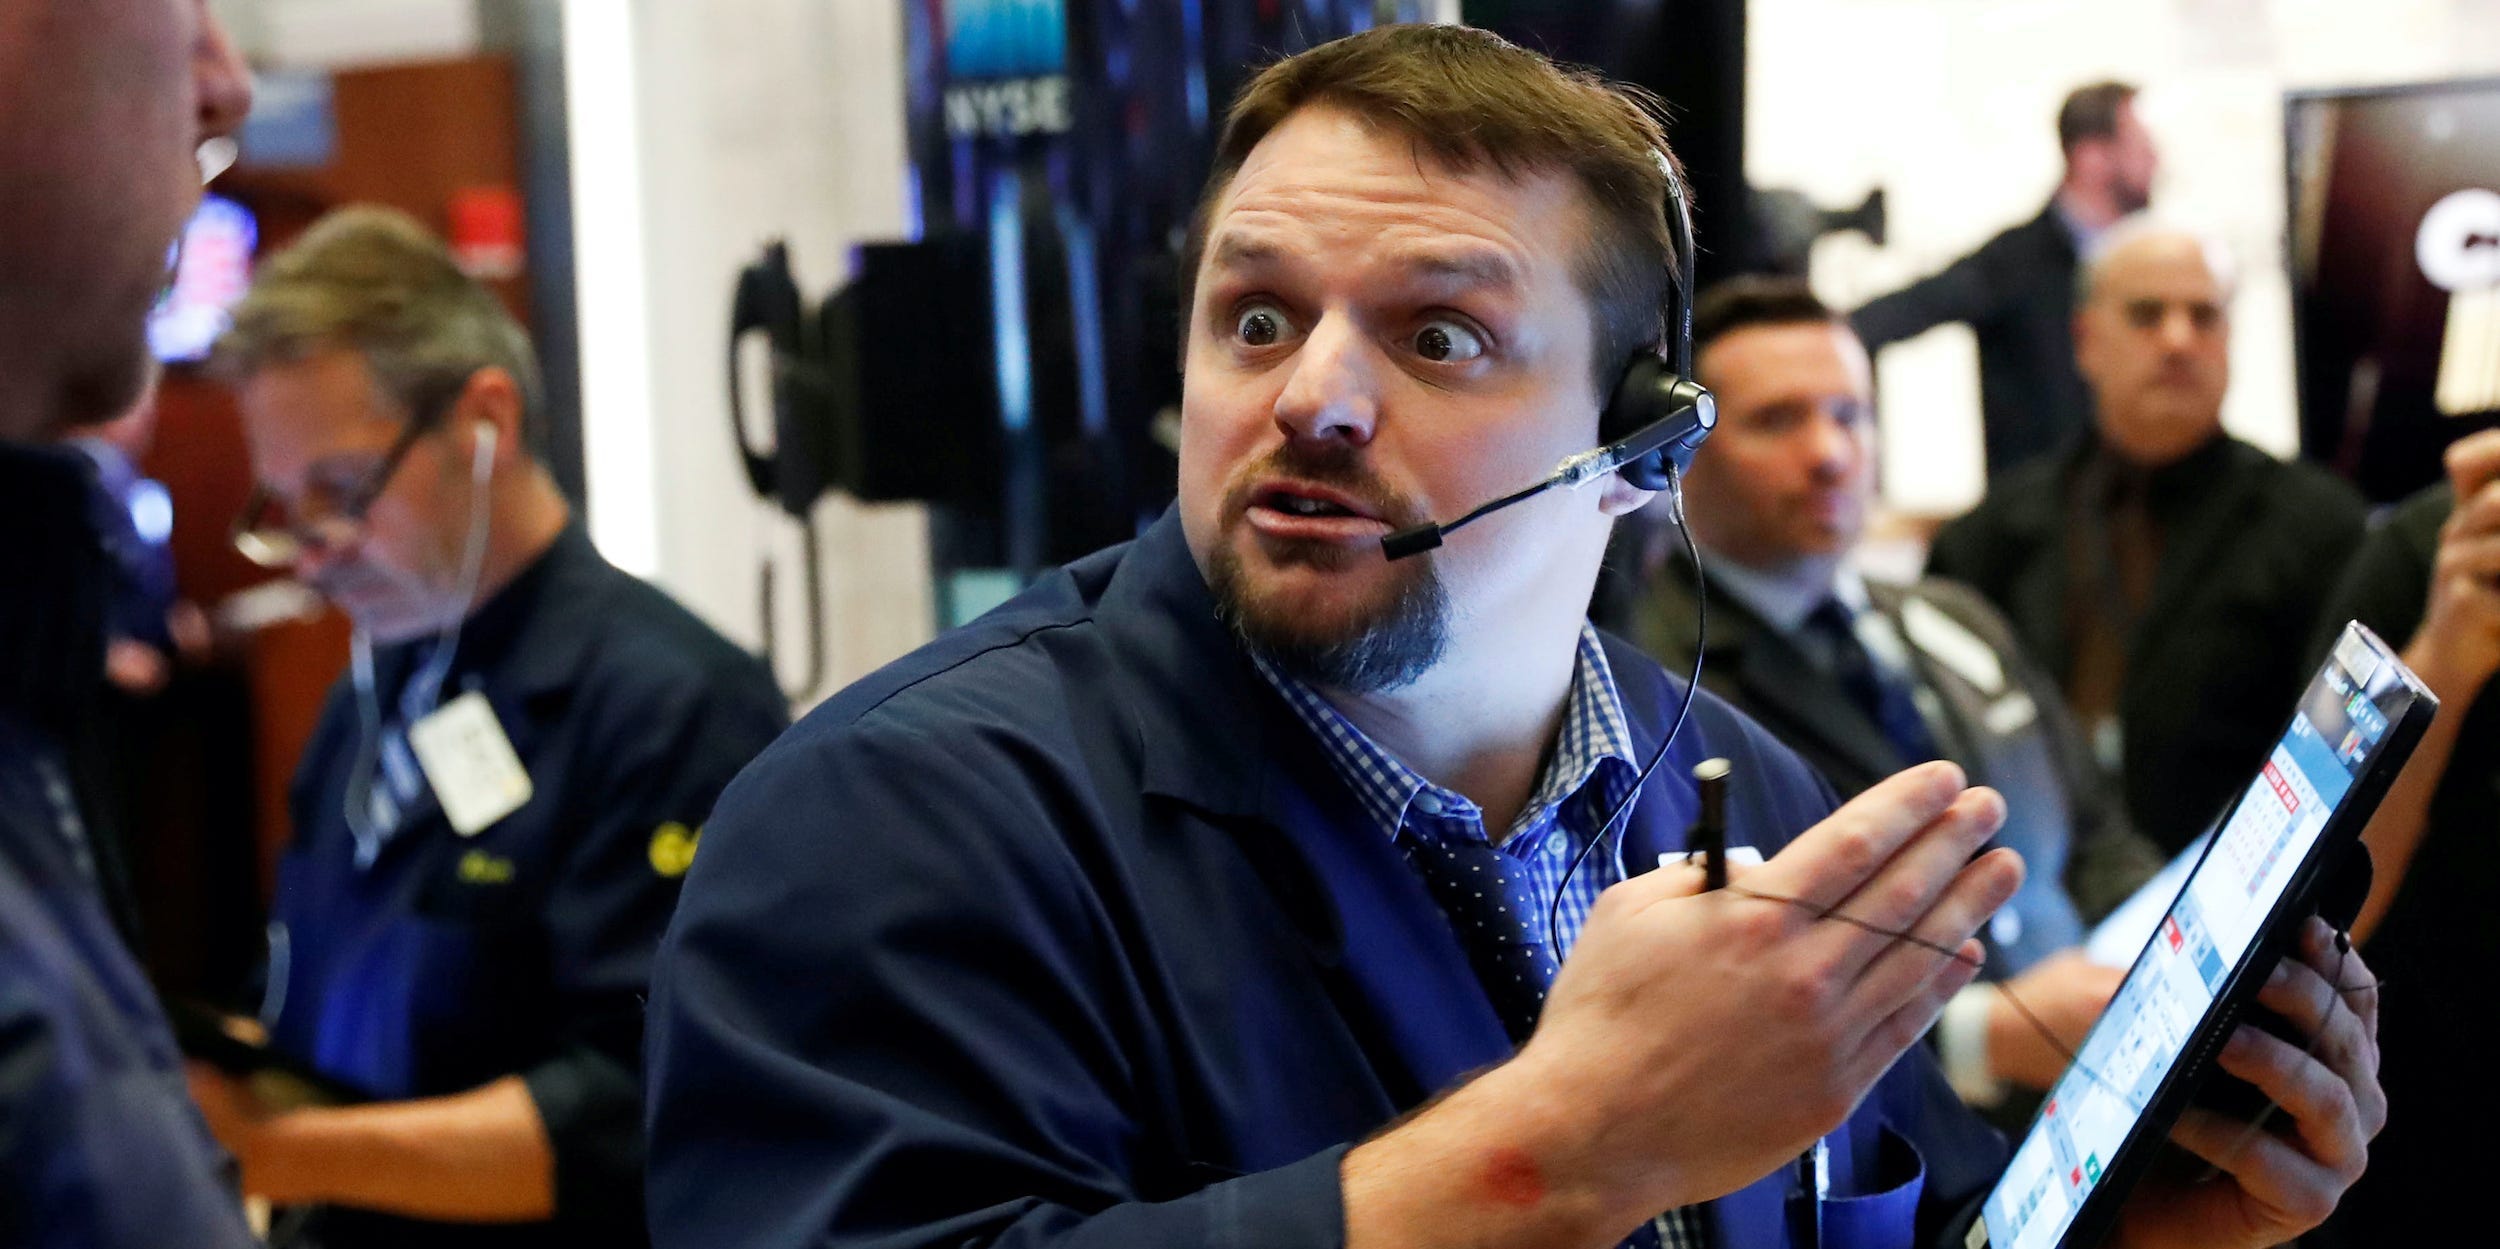 NYSE trader worried